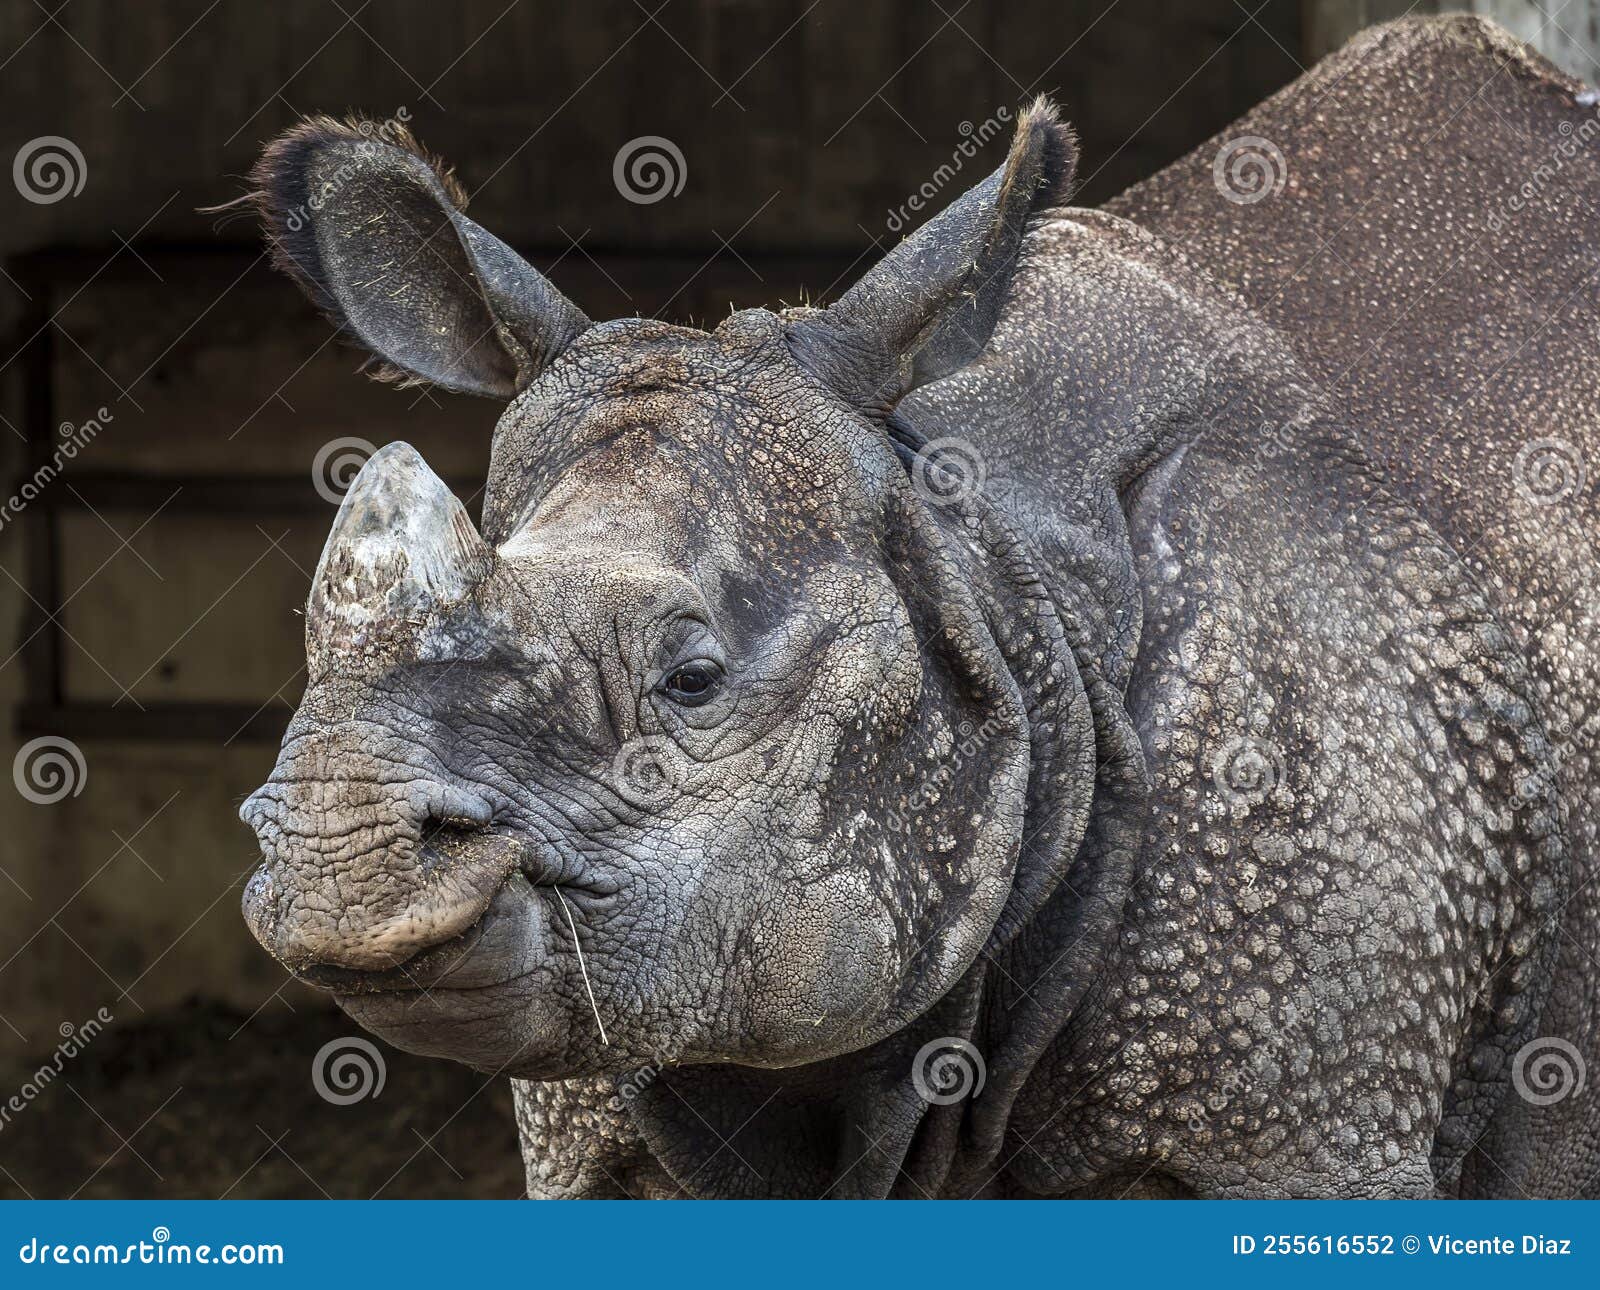 big rhinocero eating some grass